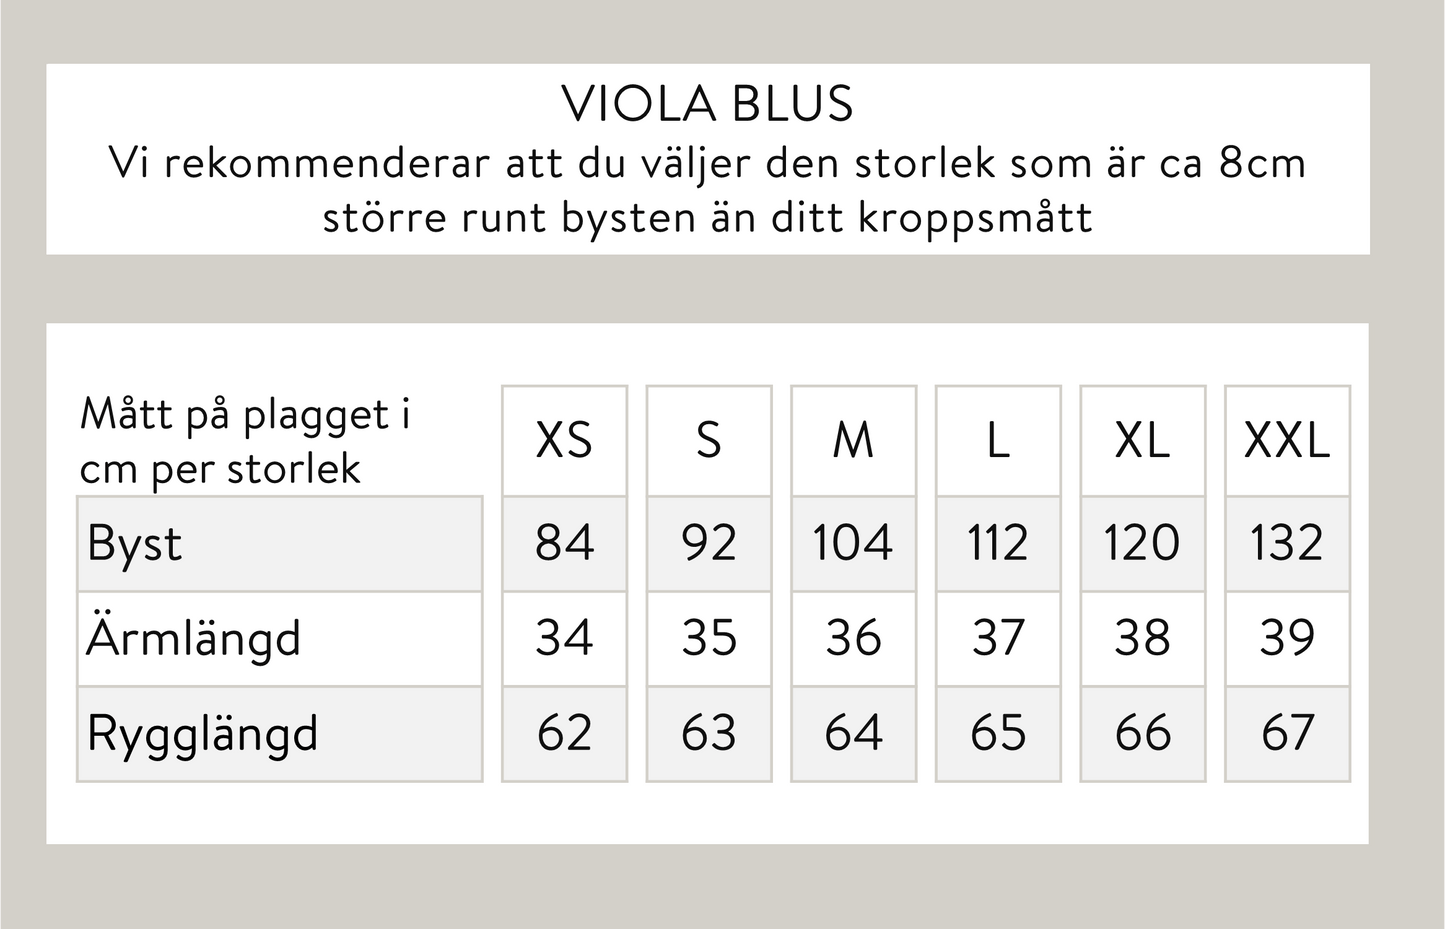 Viola blus - Offwhite